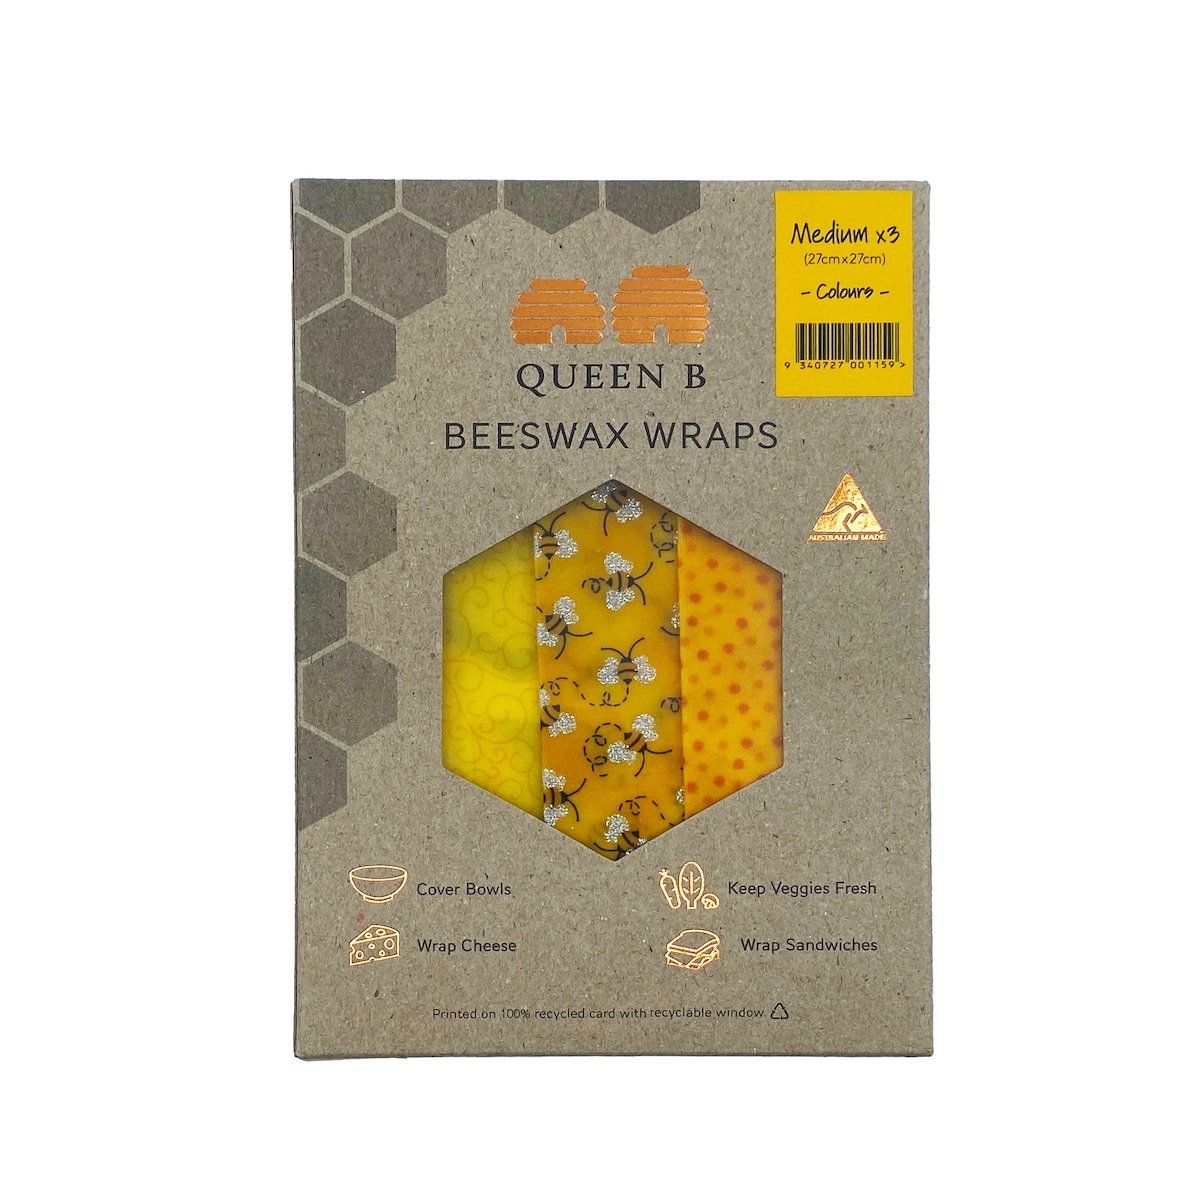 Queen B Beeswax Wraps Medium X 3